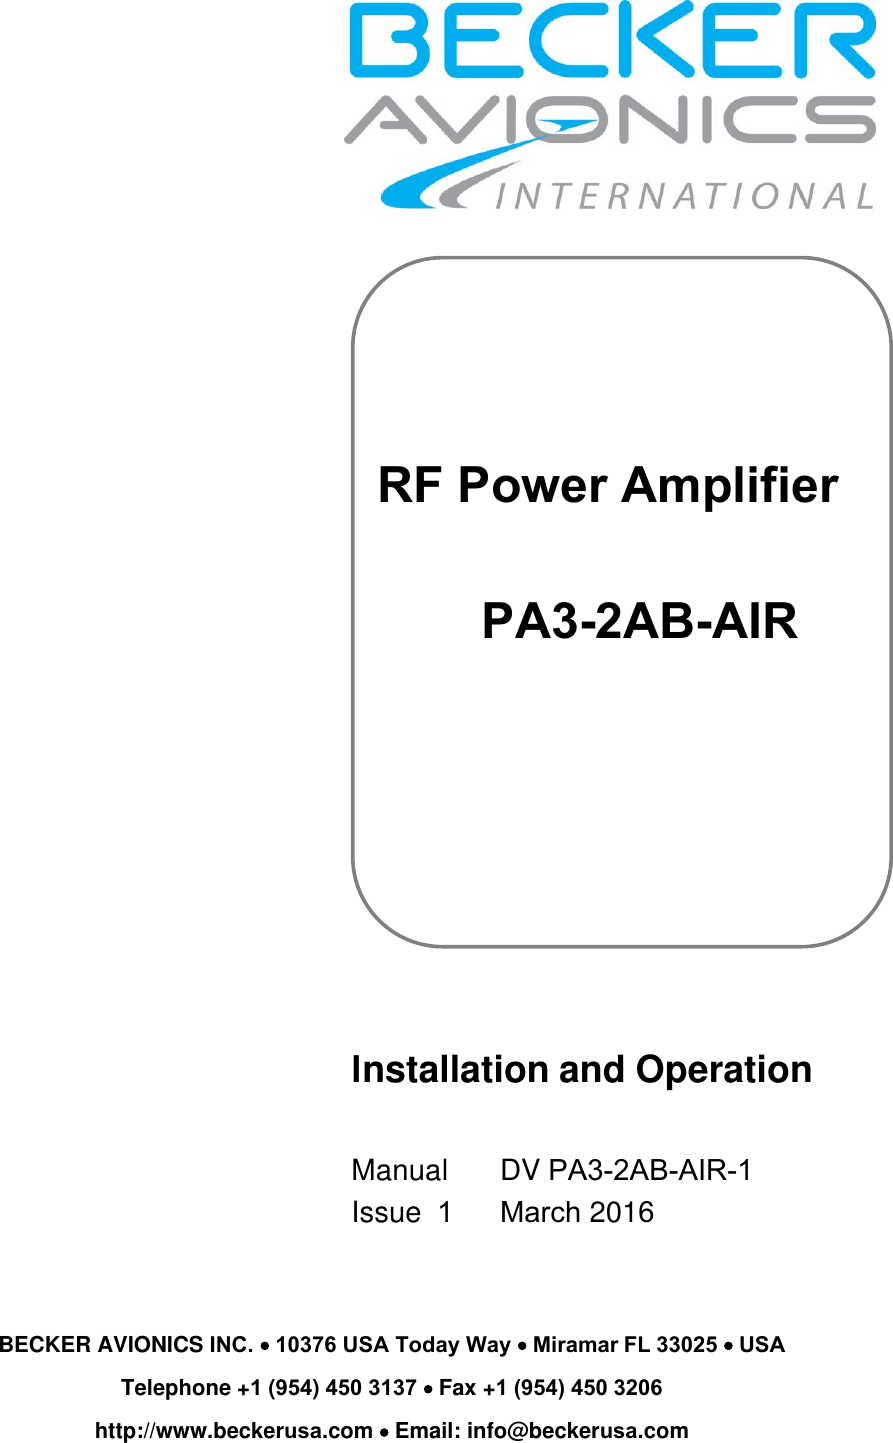 RF Power Amplifier PA3-2AB-AIRlnstallation and Operation Manual Issue 1DV PA3-2AB-AIR-1March 2016BECKER AVIONICS INC.  10376 USA Today Way  Miramar FL 33025  USATelephone +1 (954) 450 3137  Fax +1 (954) 450 3206http://www.beckerusa.com  Email: info@beckerusa.com